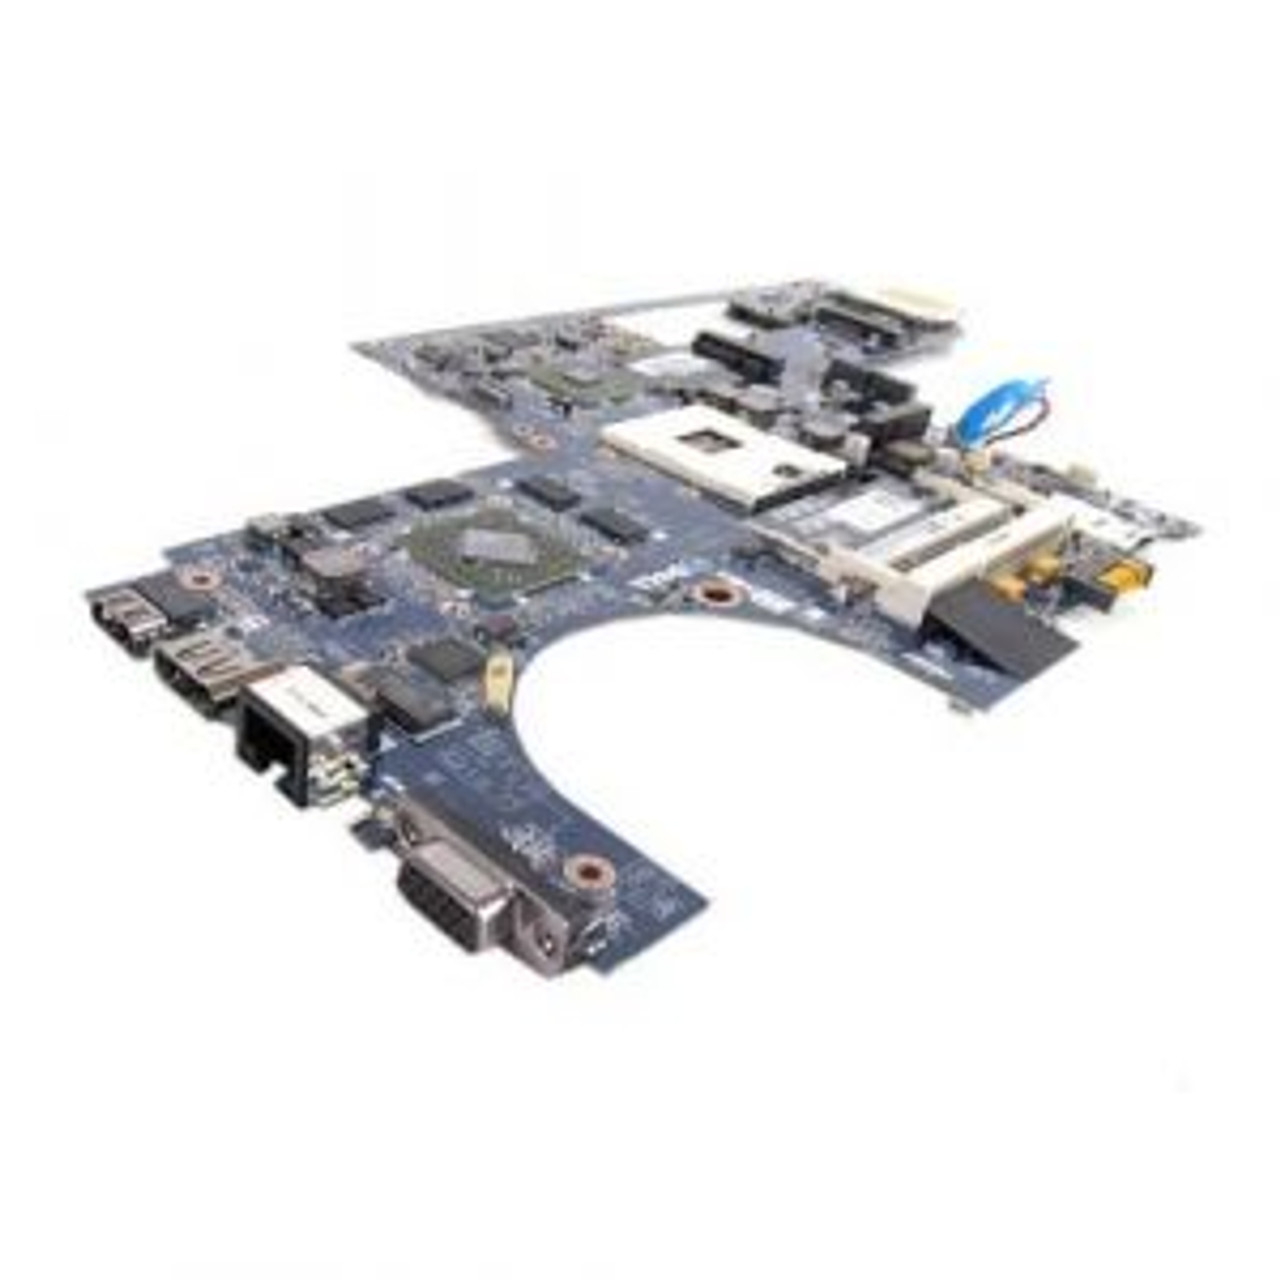 0H281K Dell System Board (Motherboard) for Studio